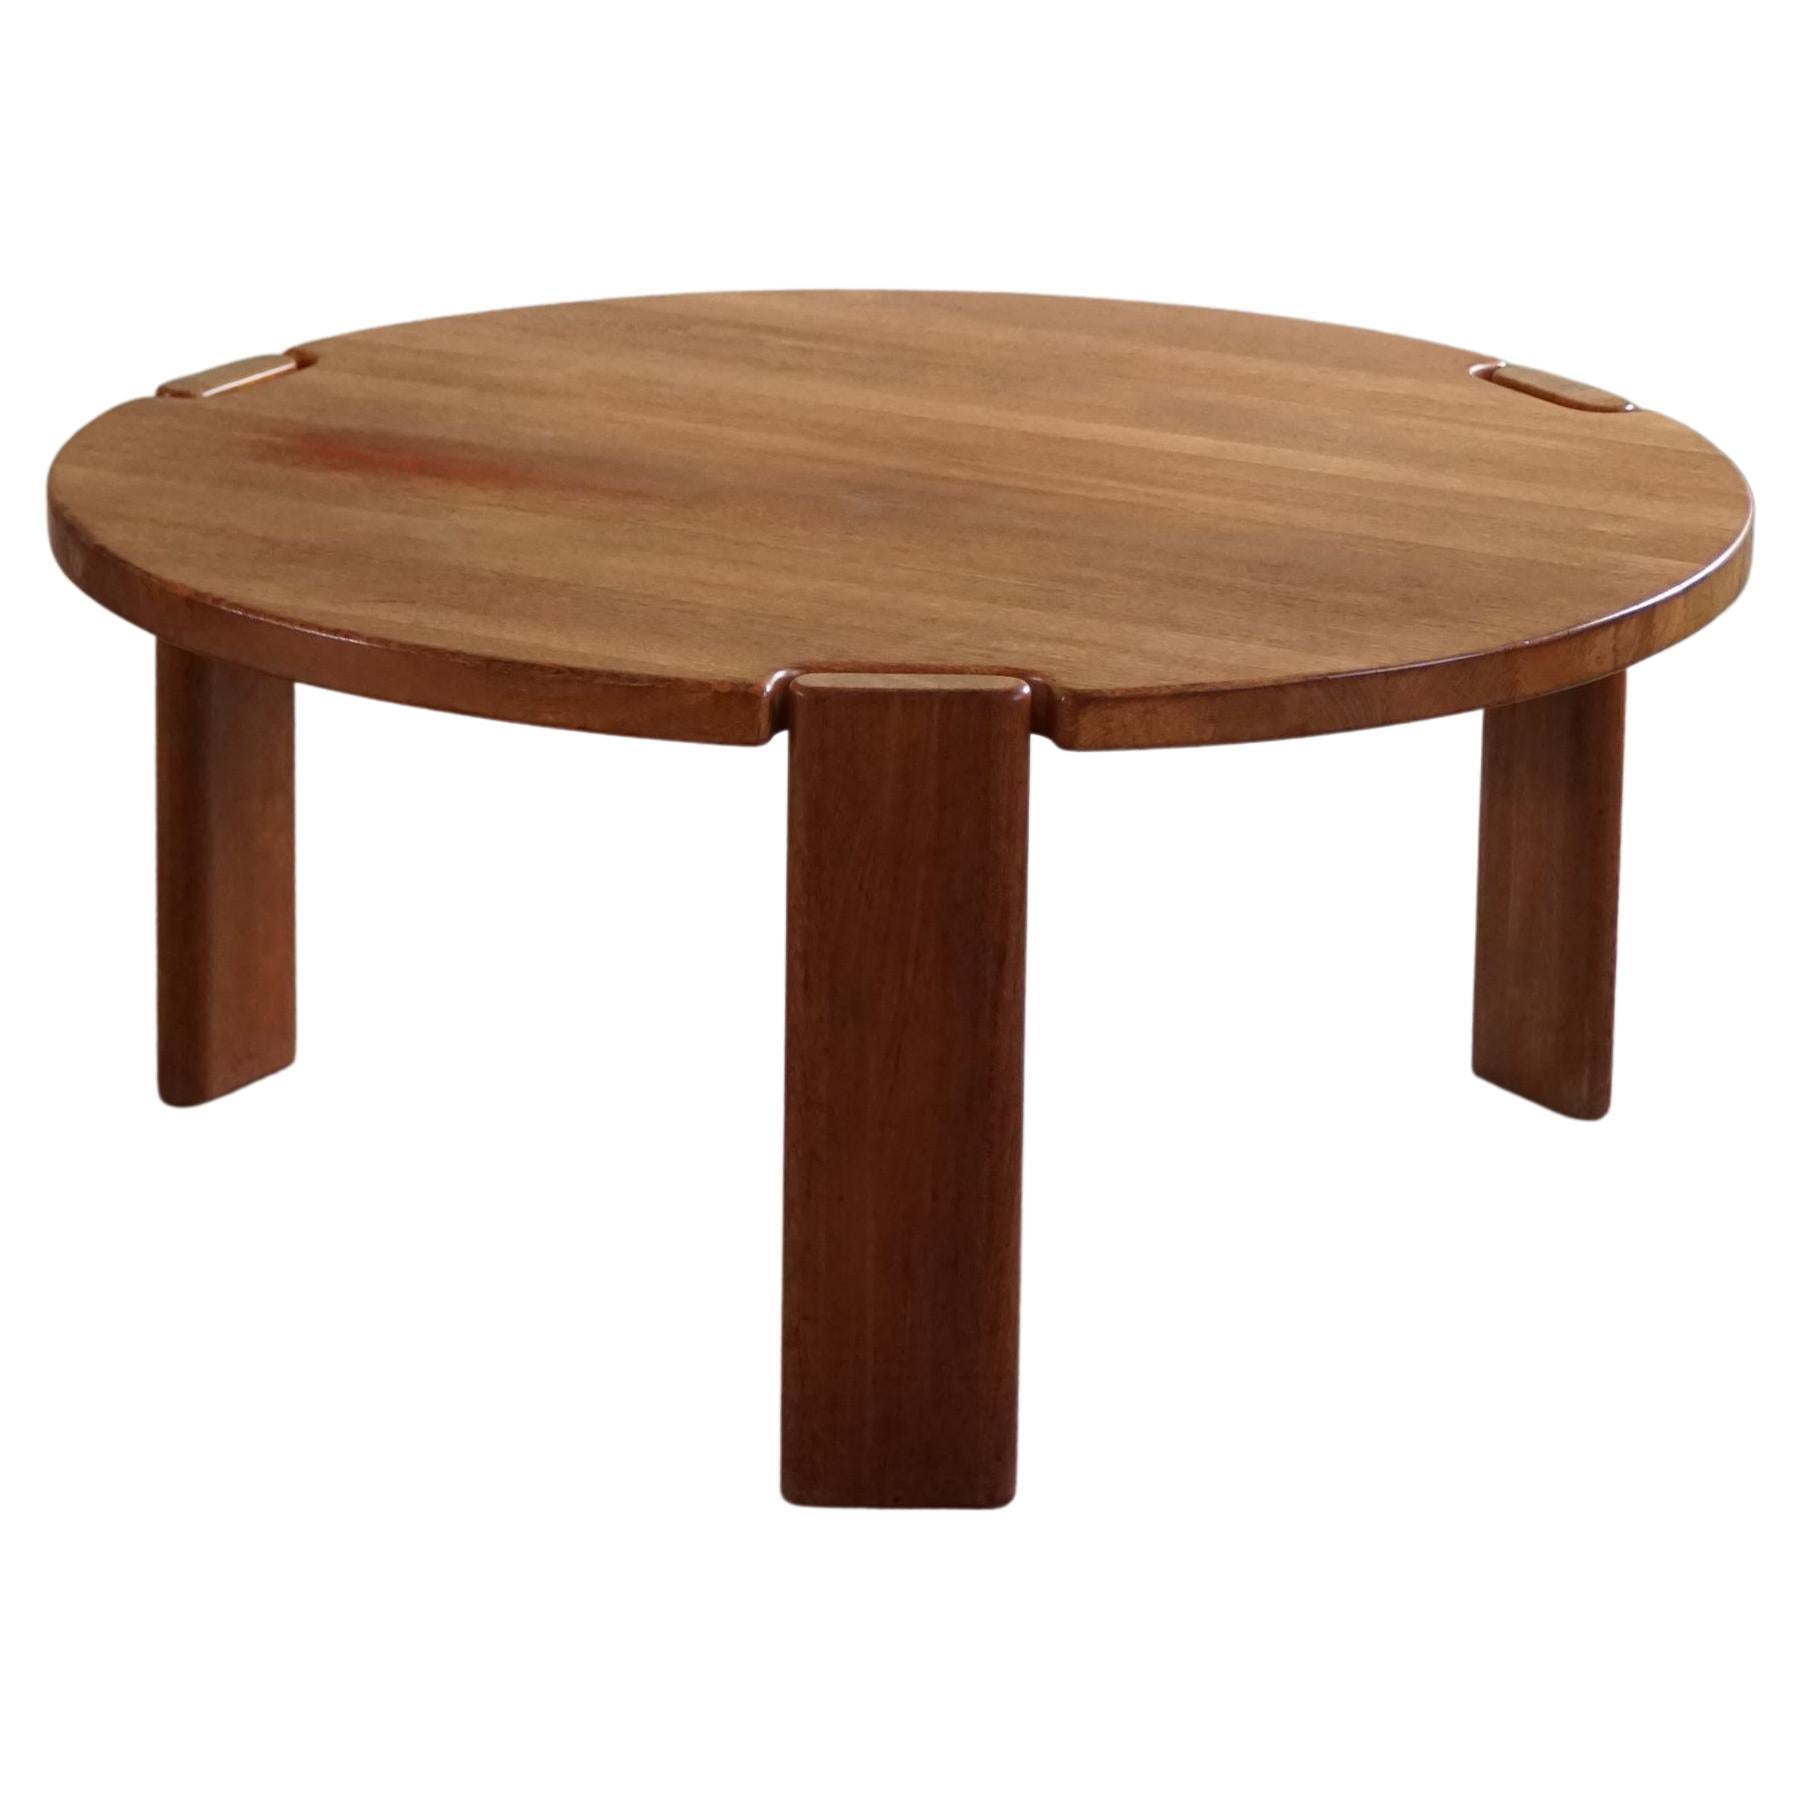 Round Sofa / Coffee Table in Teak, By Komfort, Danish Mid Century Modern, 1960s For Sale